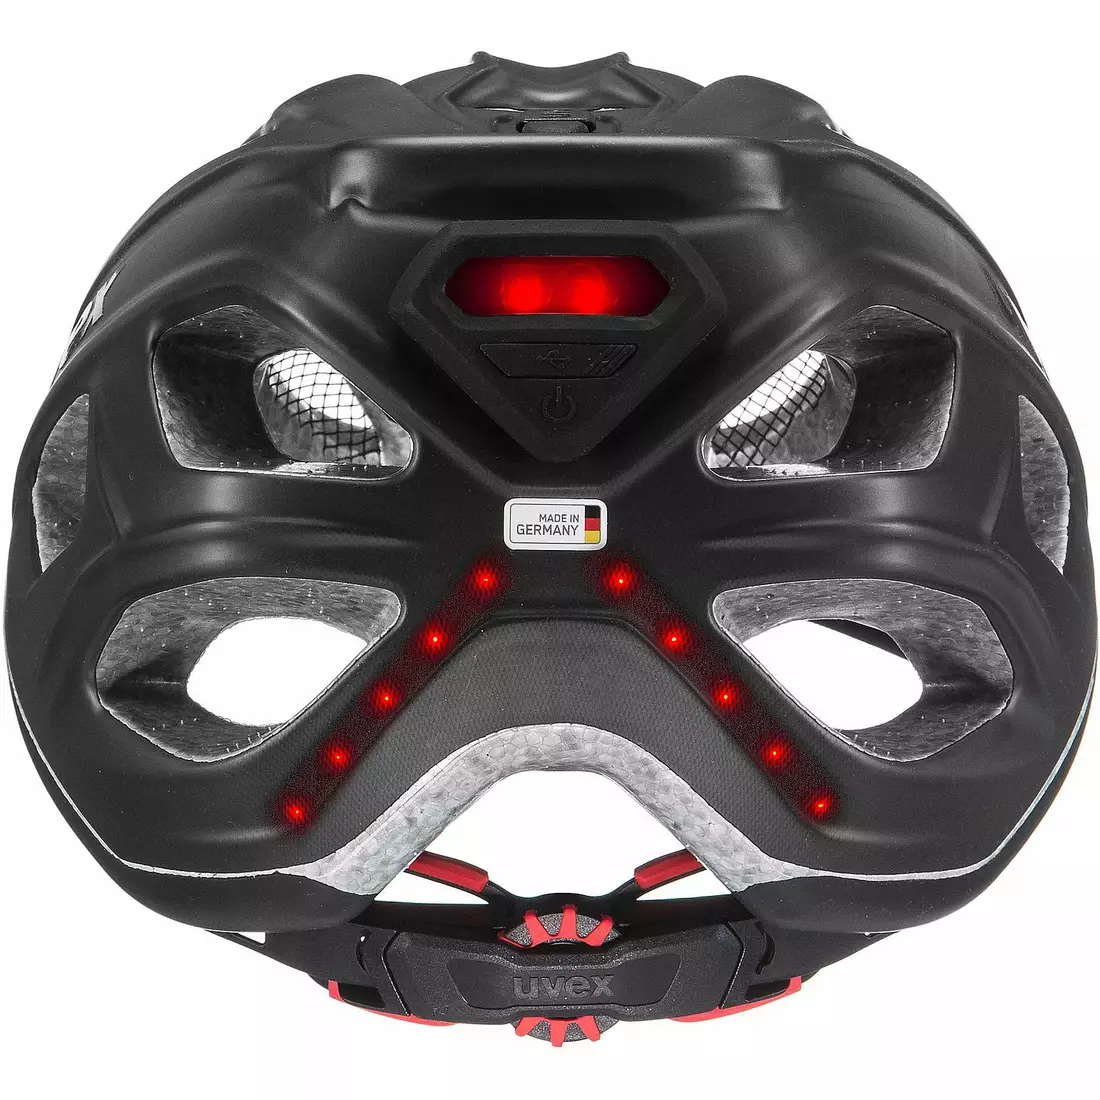 UVEX cyklistická helma City light anthracite mat